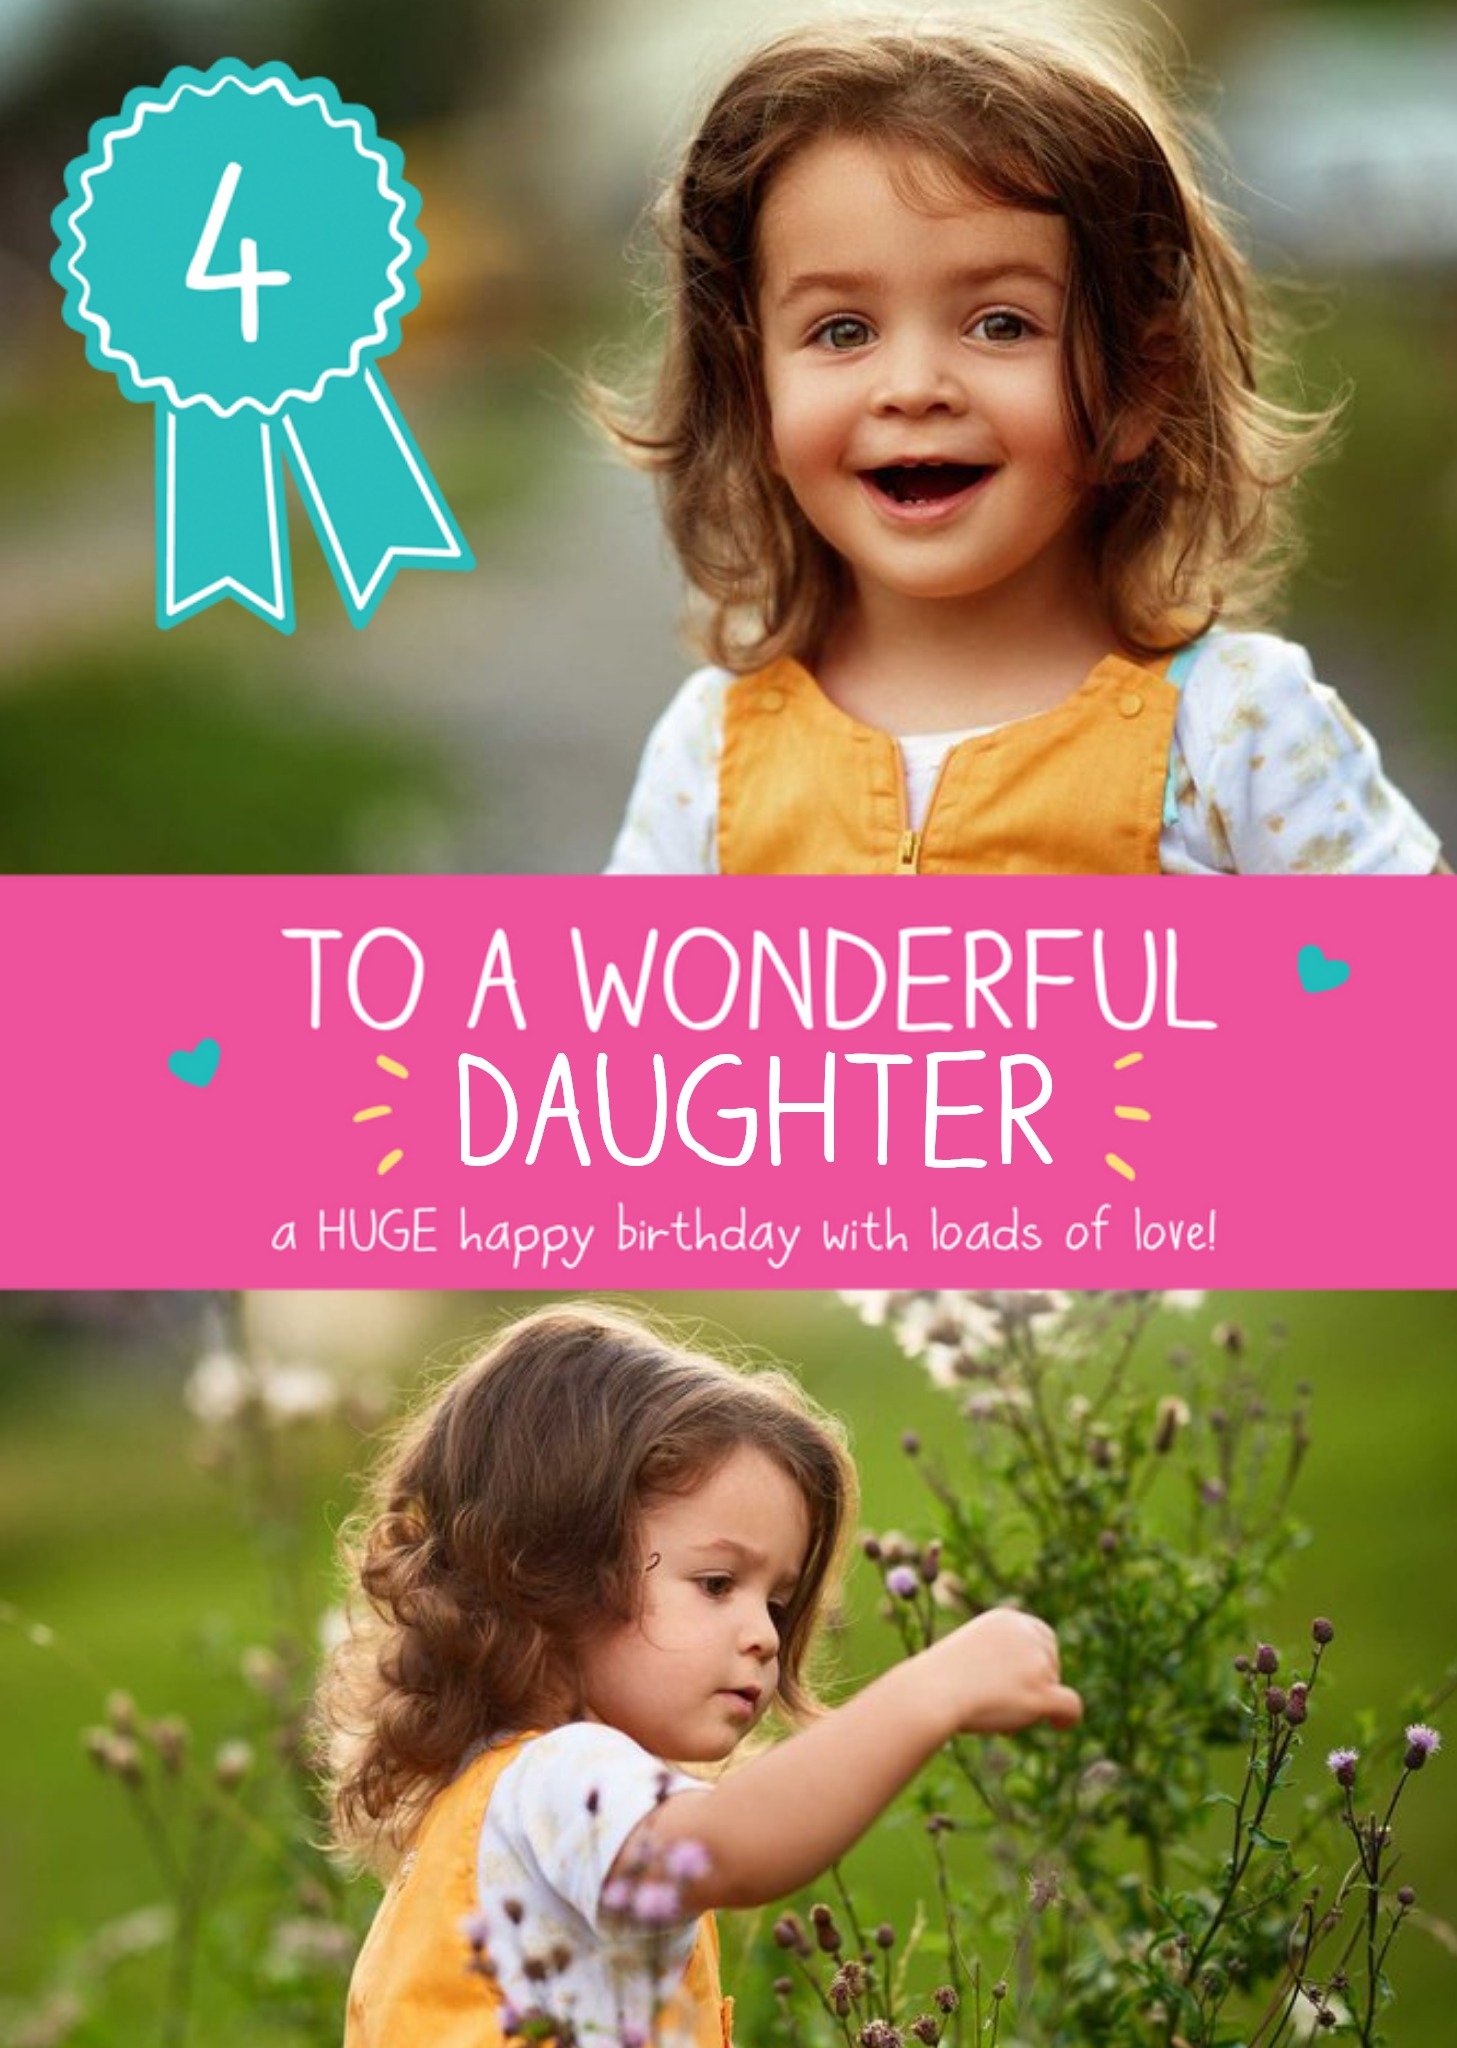 Happy Jackson Wonderful Daughter Pink Photo Upload 4th Birthday Card, Large